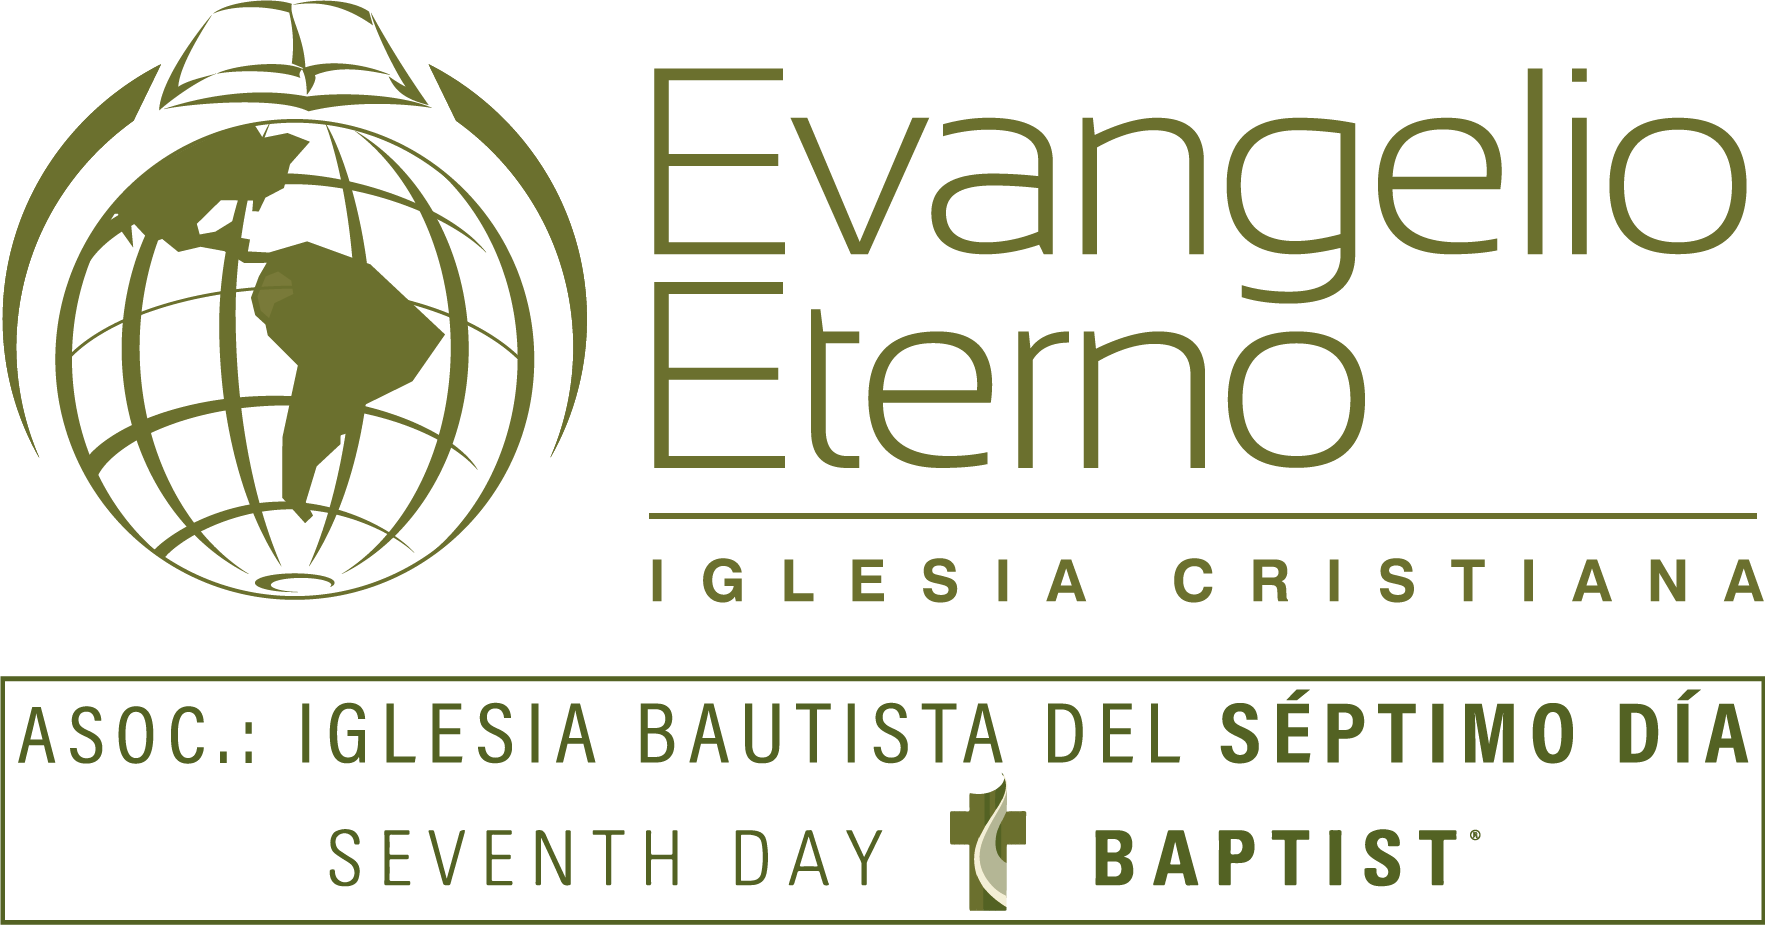 Iglesia Evangelio Eterno